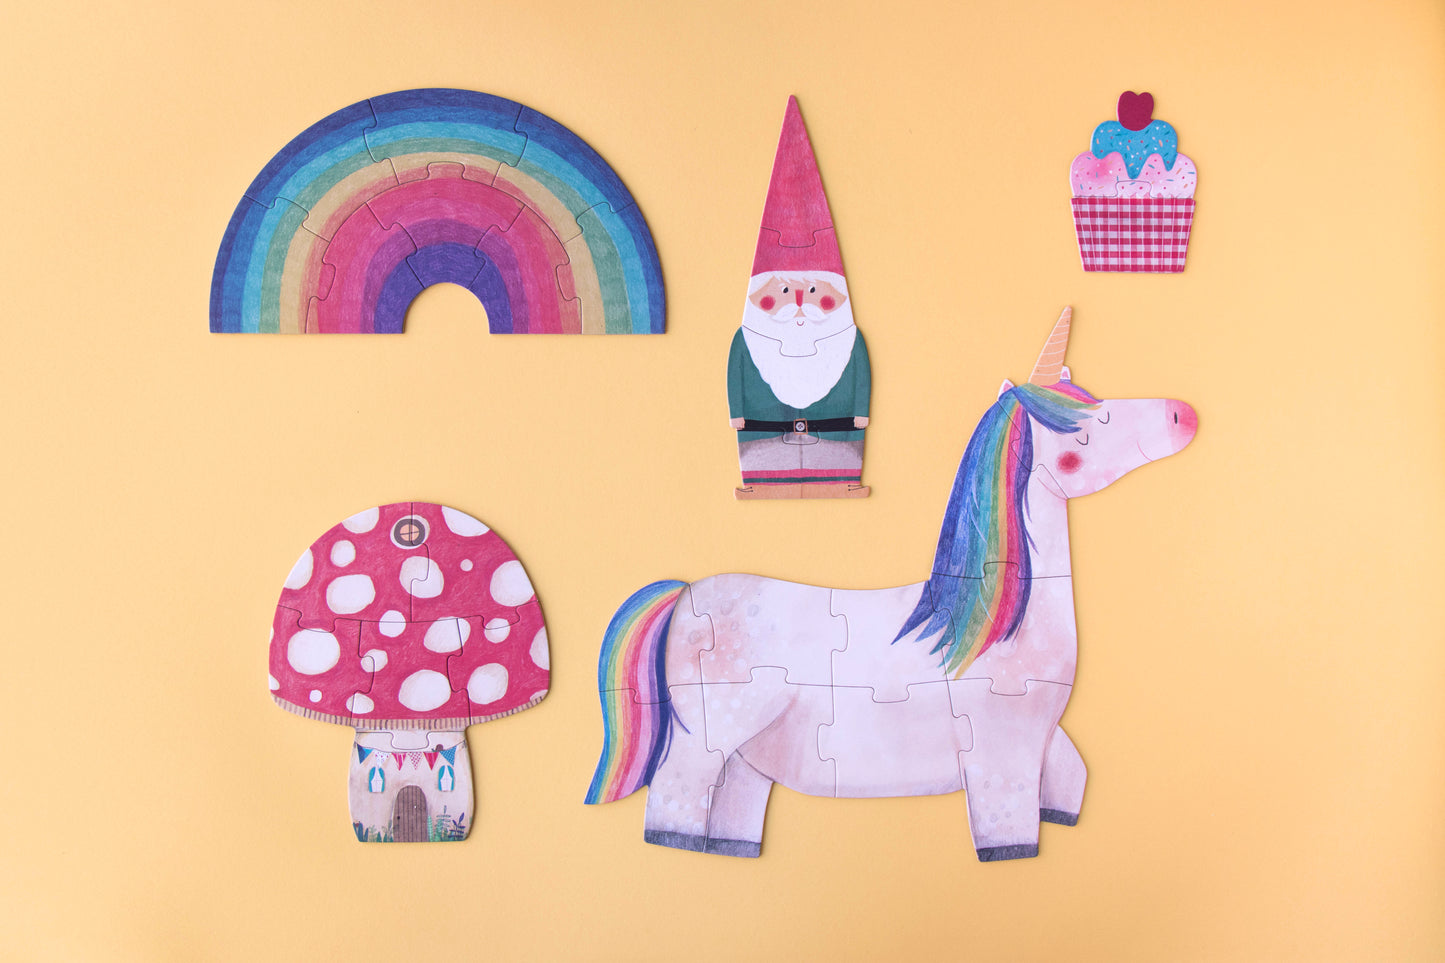 Puzzle "Happy Birthday Unicorn!", 2-10 Teile, ab 3 Jahren